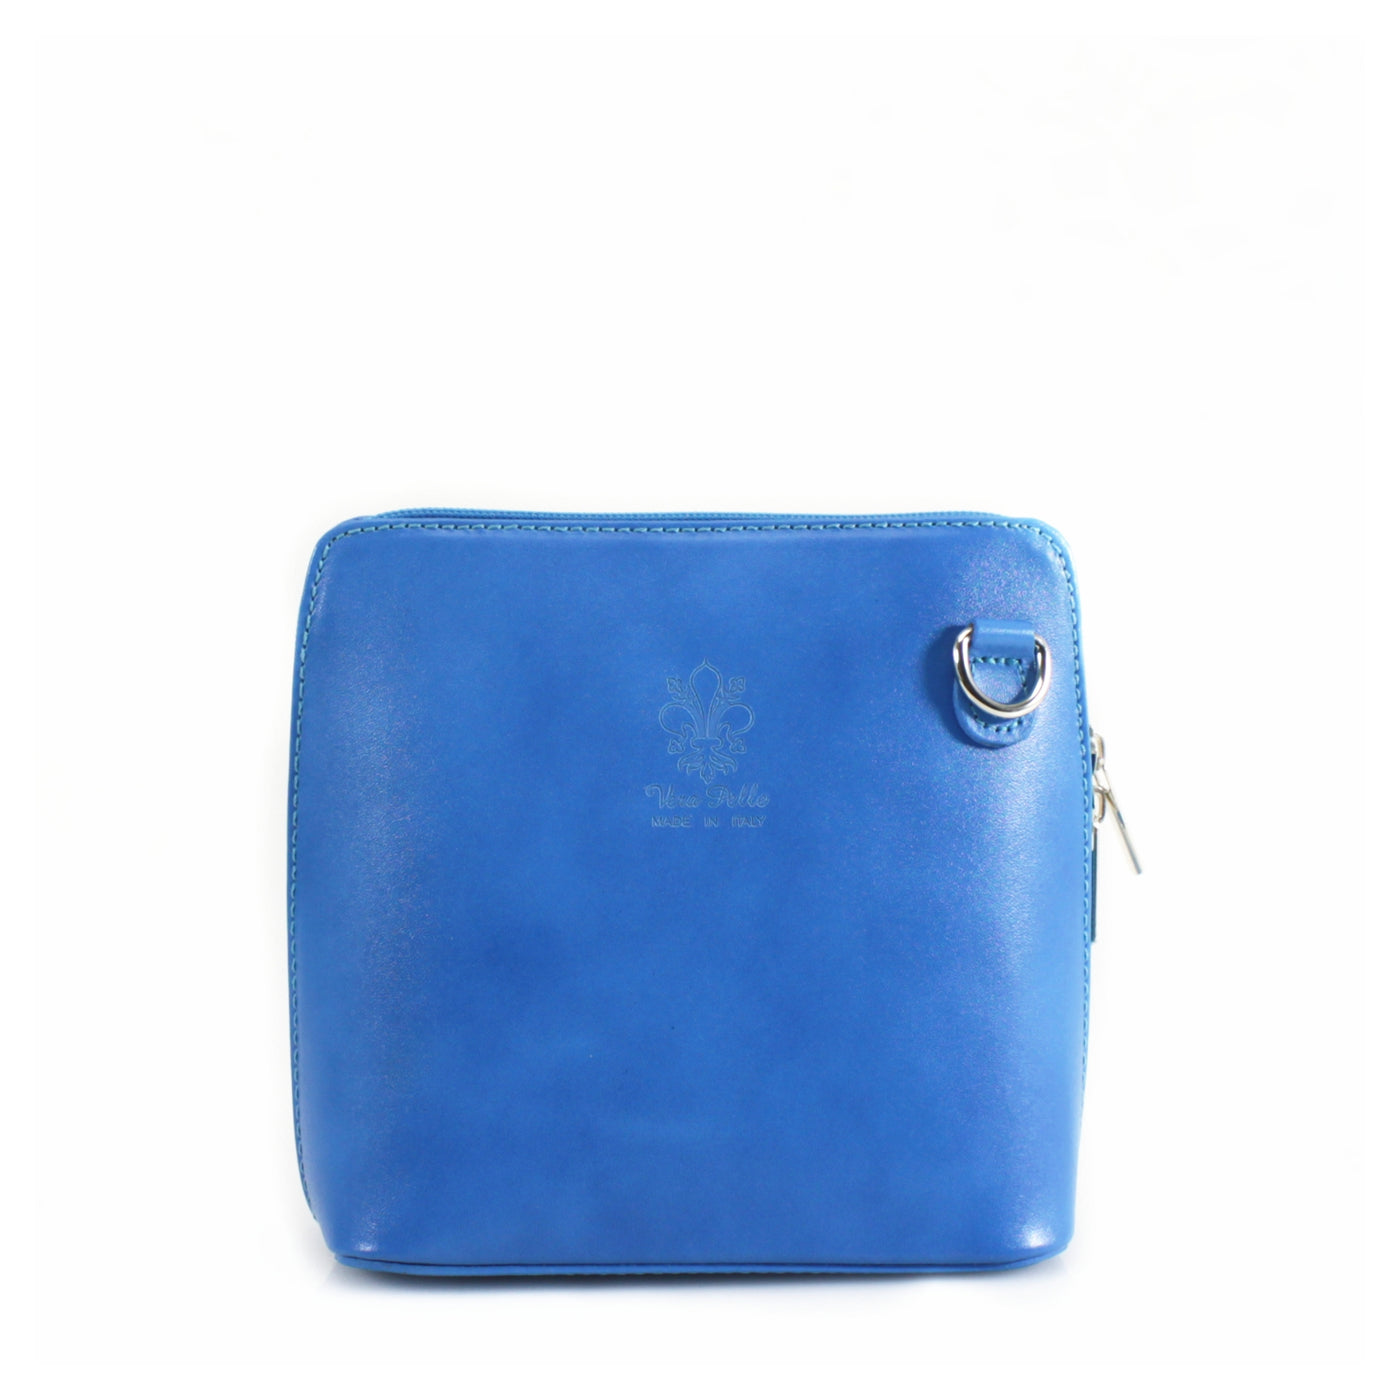 Leather Mini Crossbody Handbag - Dark Turquoise Blue